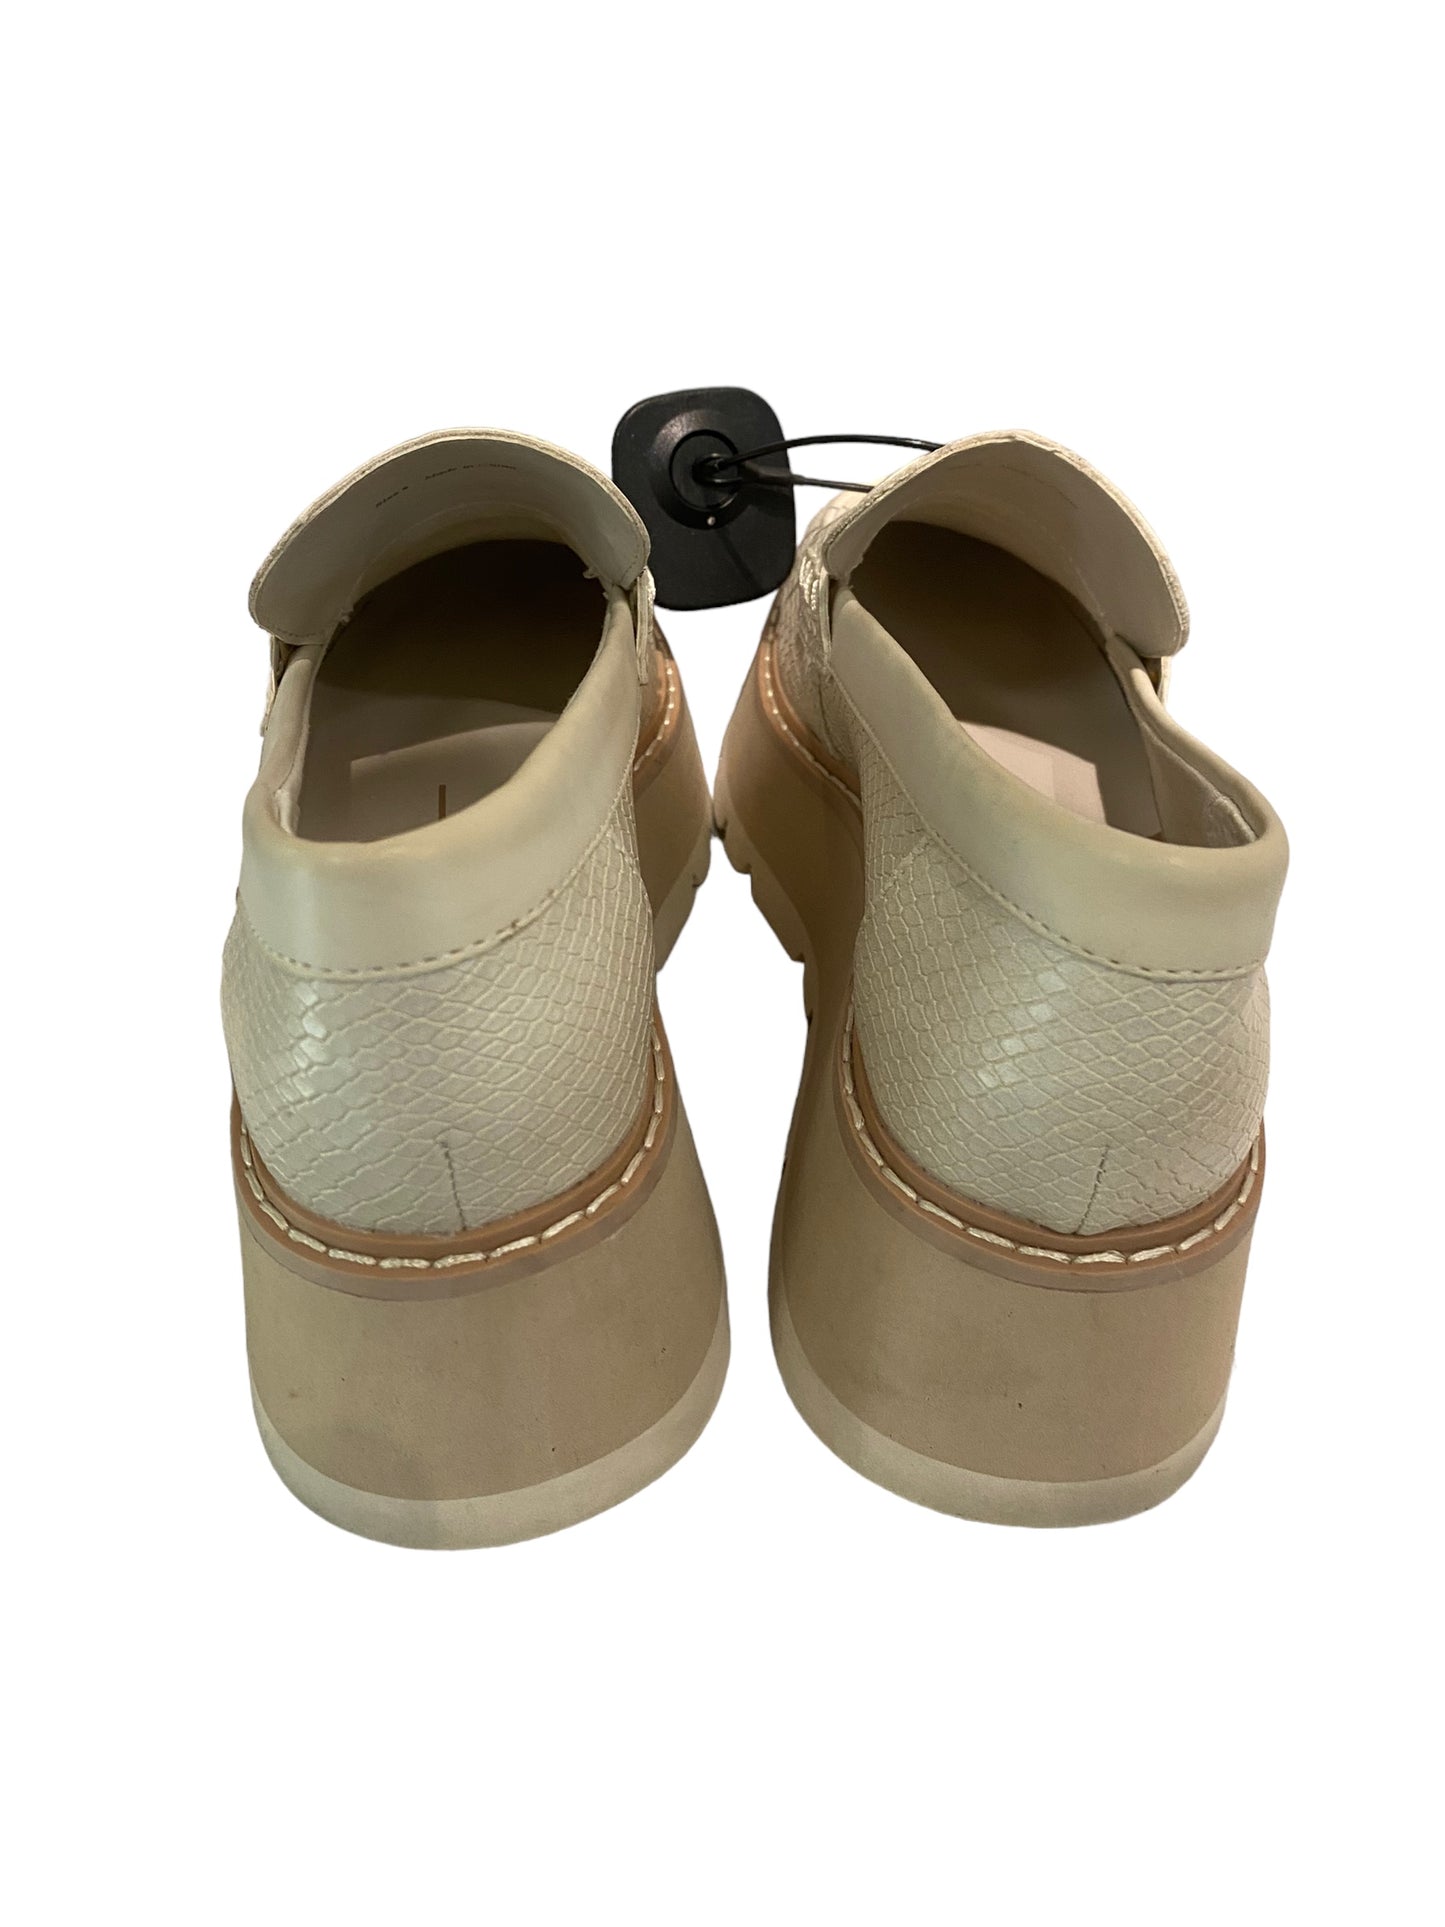 Shoes Heels Platform By Dolce Vita  Size: 6